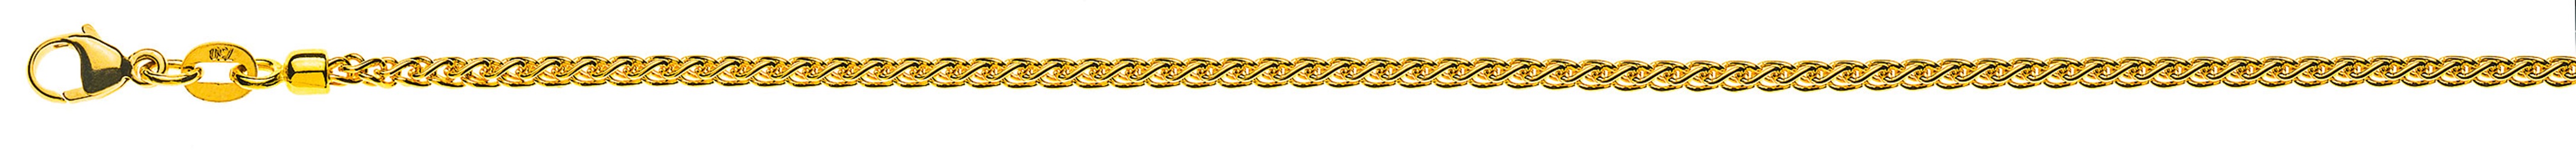 AURONOS Prestige Necklace yellow gold 18K cable chain 40cm 2.15mm